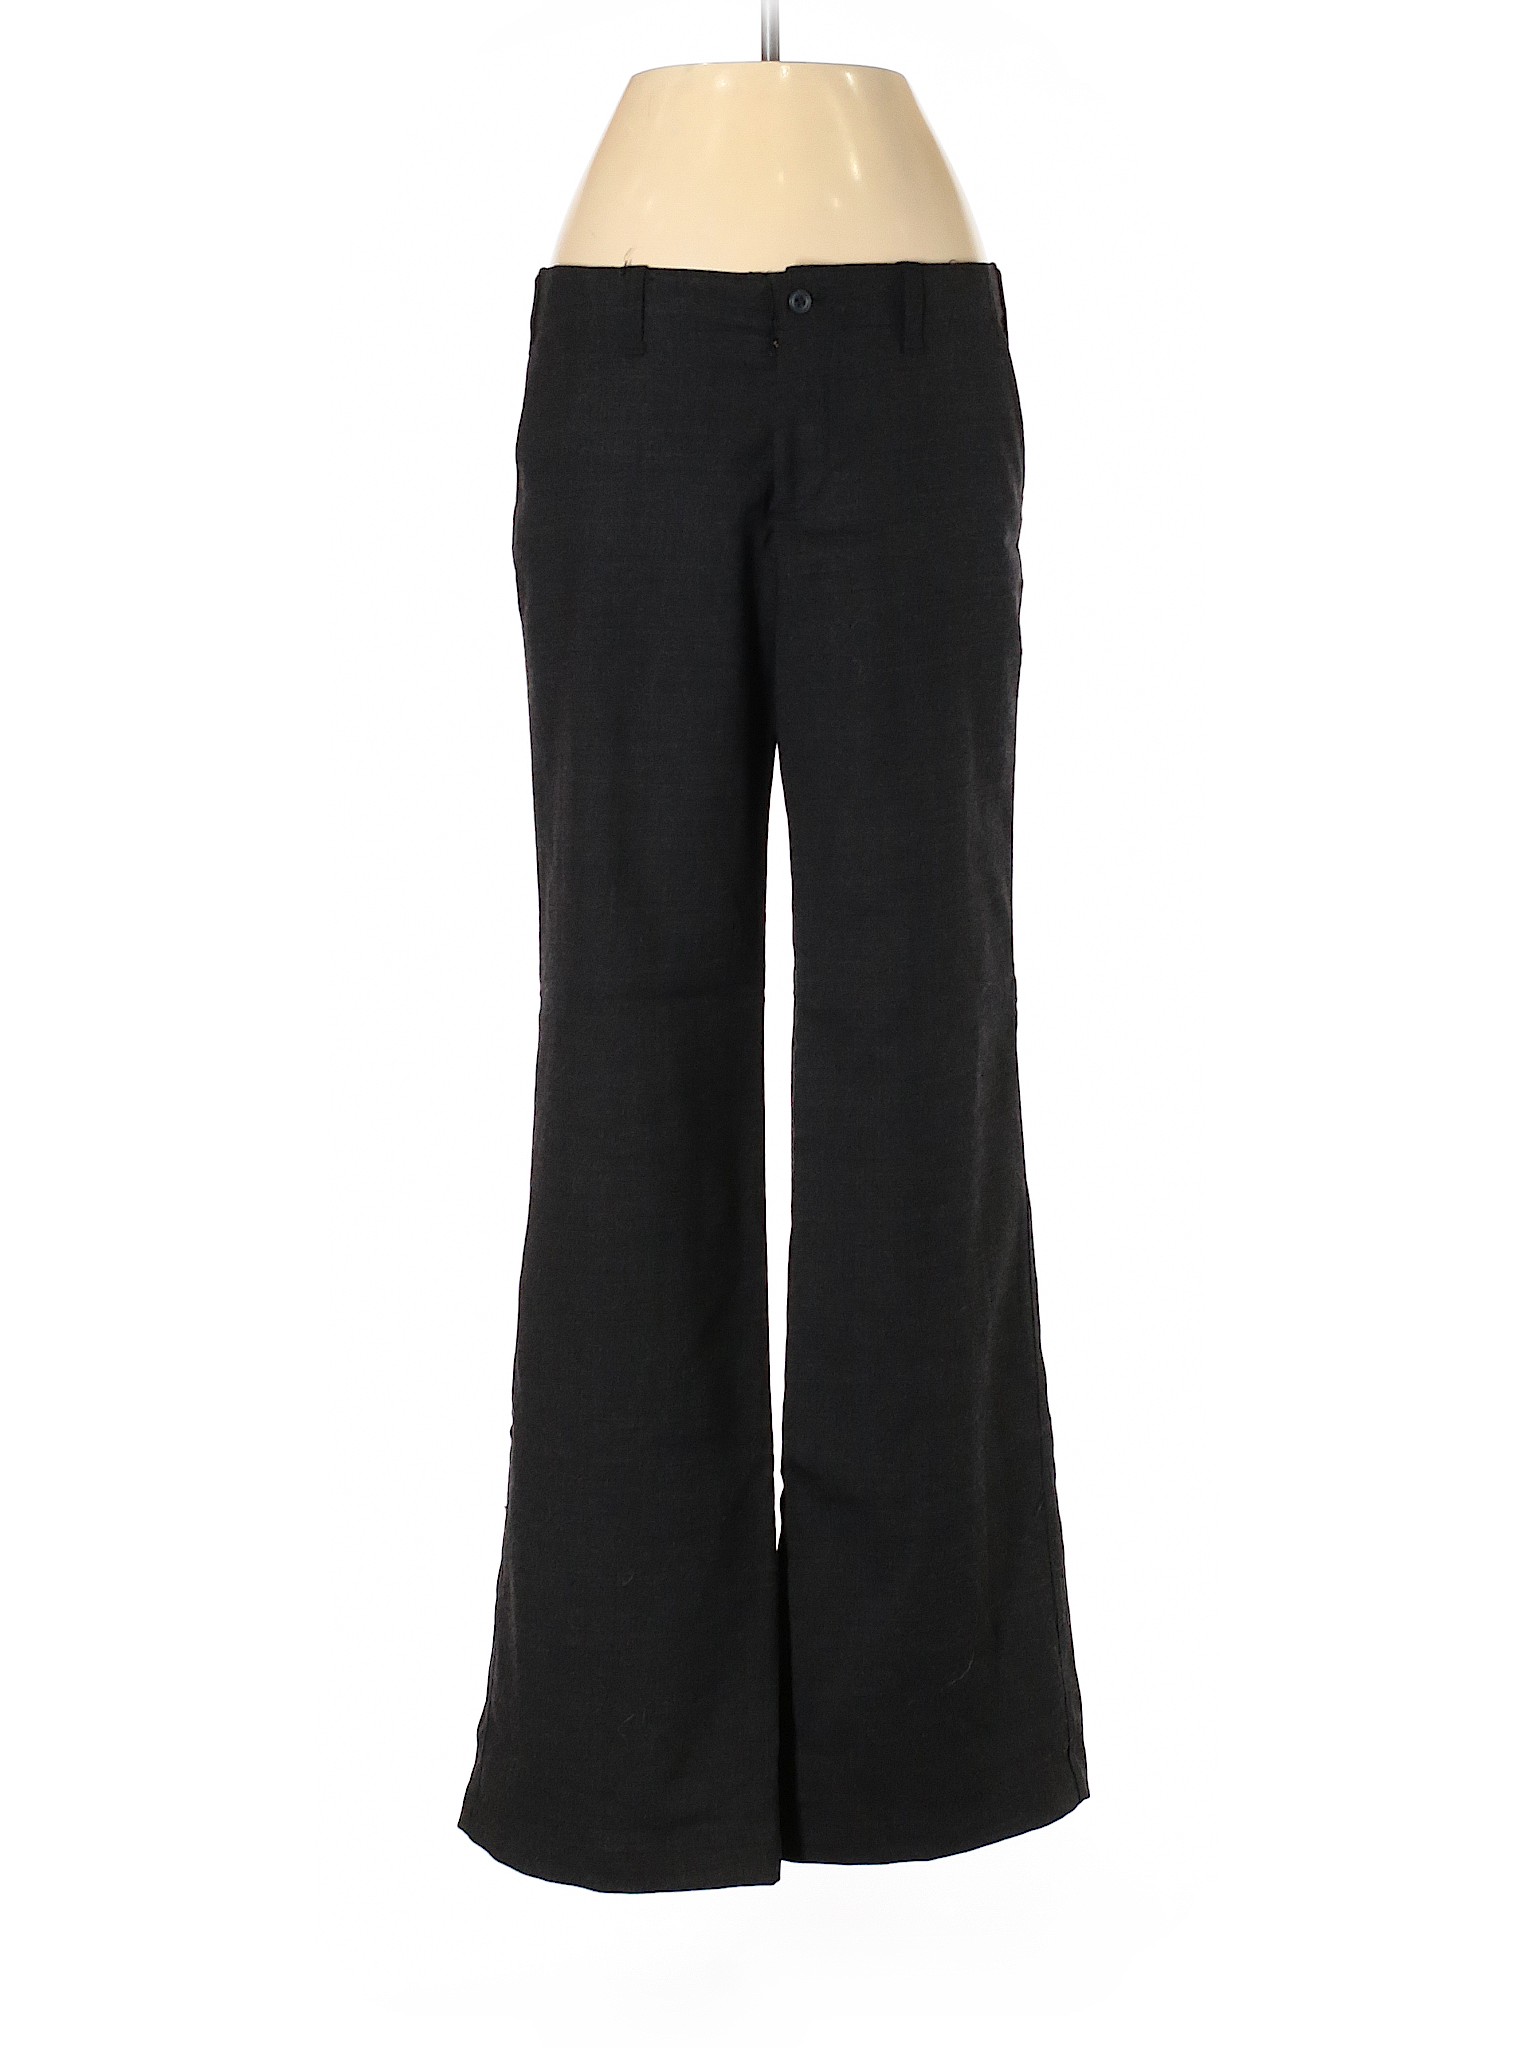 Gap Women Black Wool Pants 2 | eBay